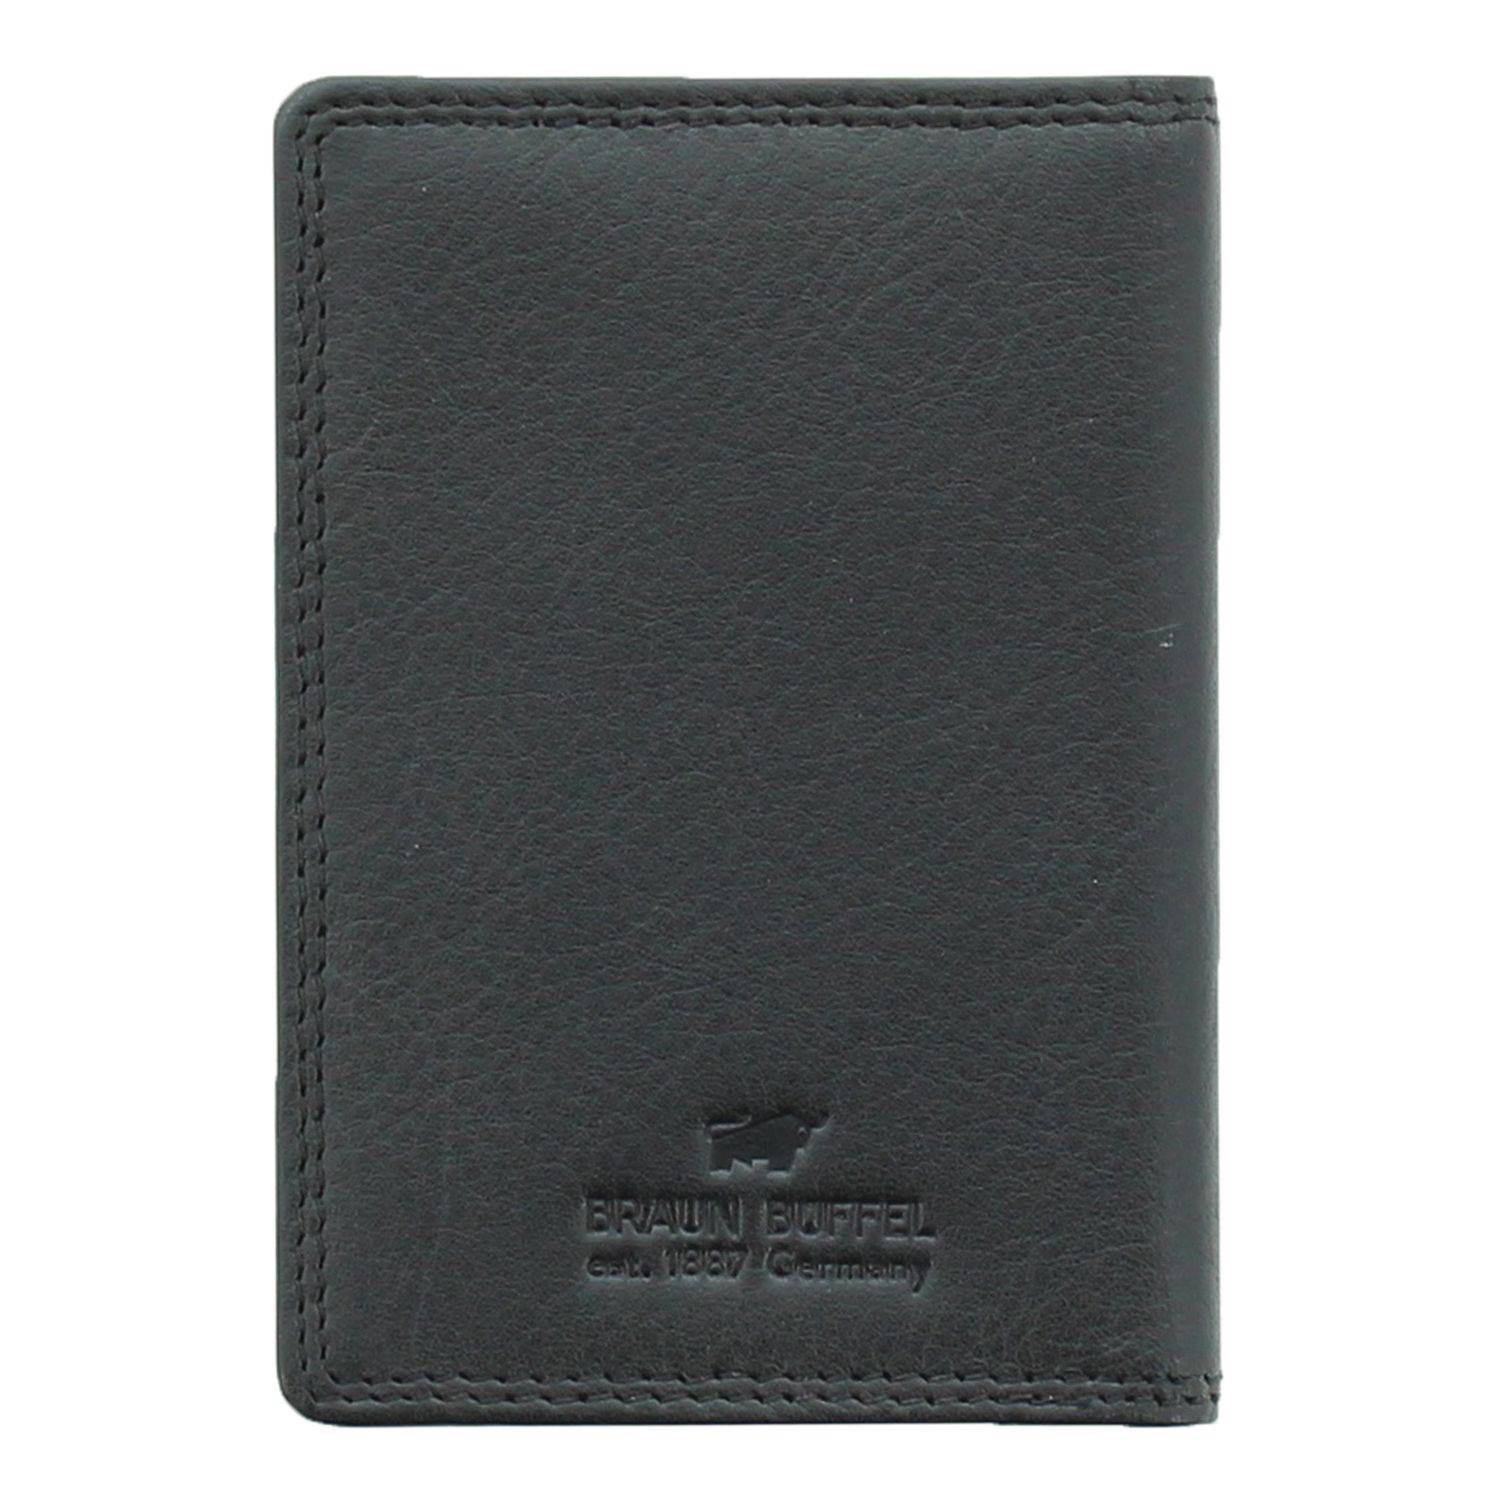 Чехол для кредитных карт Braun Buffel GOLF 2.0 Card Case 10CS 90446, цвет черный, размер ONE SIZE - фото 4